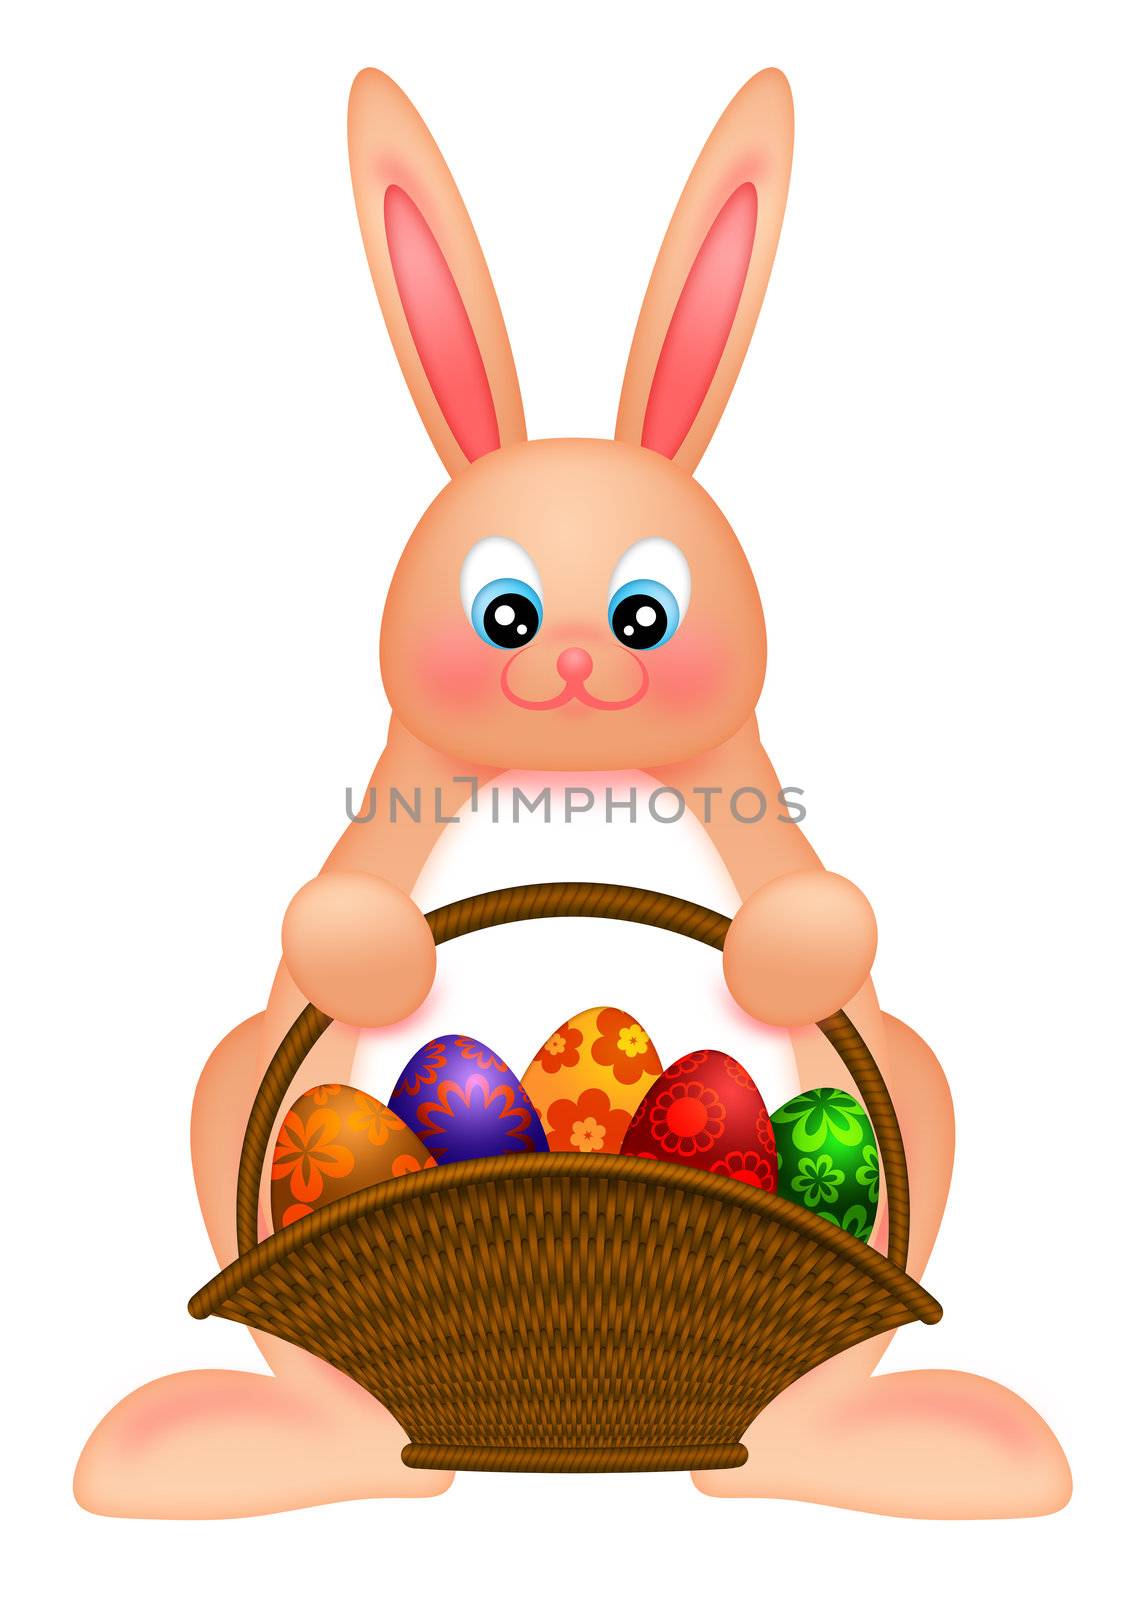 Happy Easter Bunny Rabbit  with Egg Basket Illustration by jpldesigns